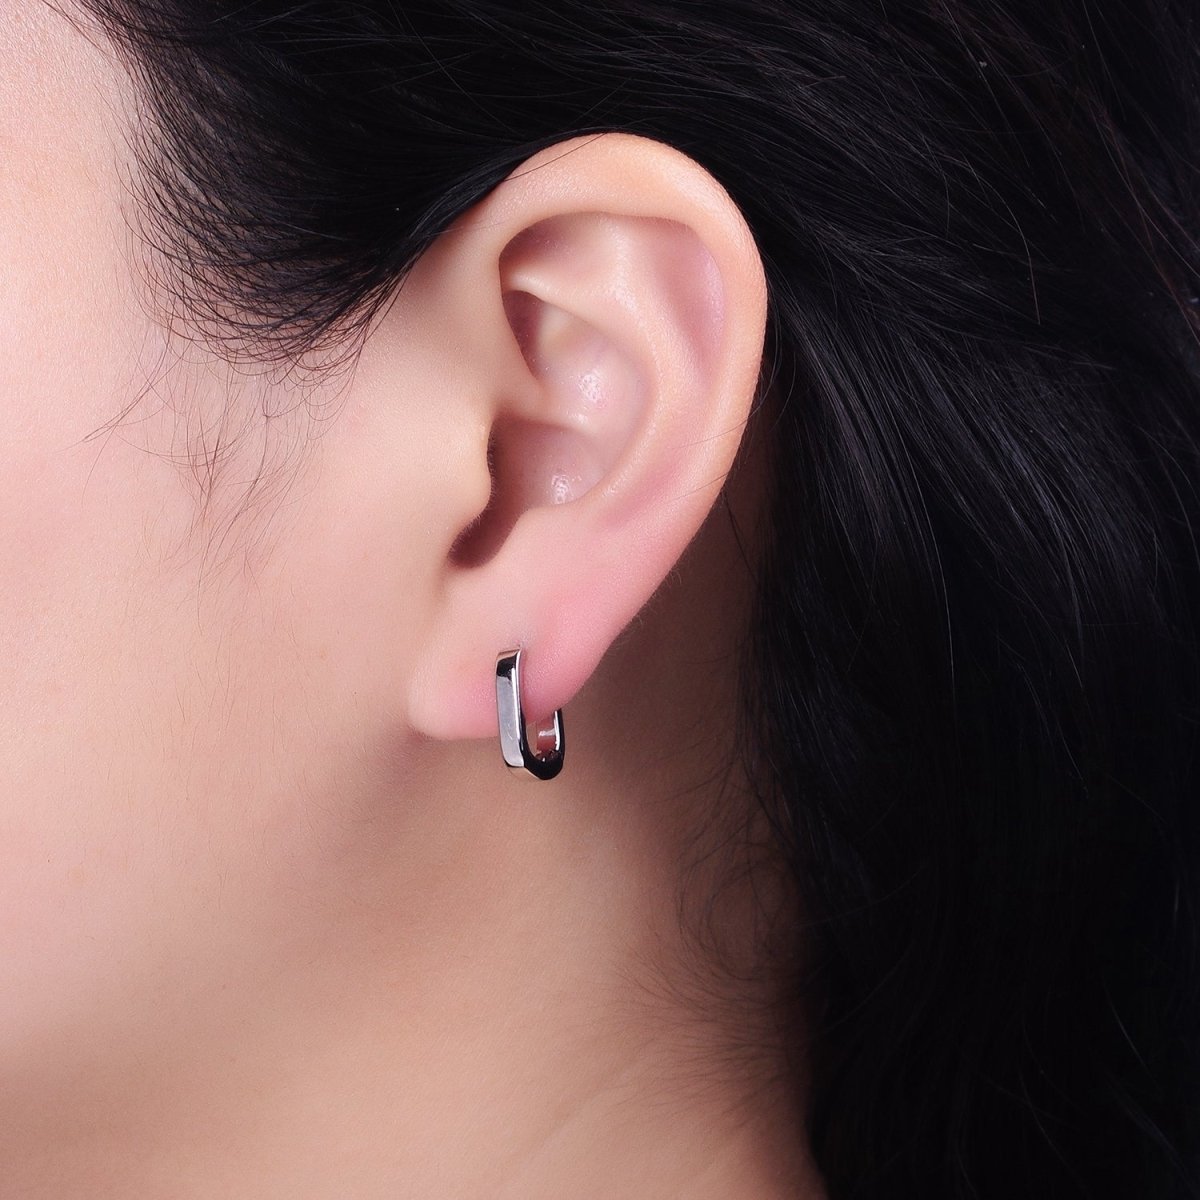 Silver 14mm U-Shaped Oblong Cartilage Hoop Earrings | AB809 - DLUXCA